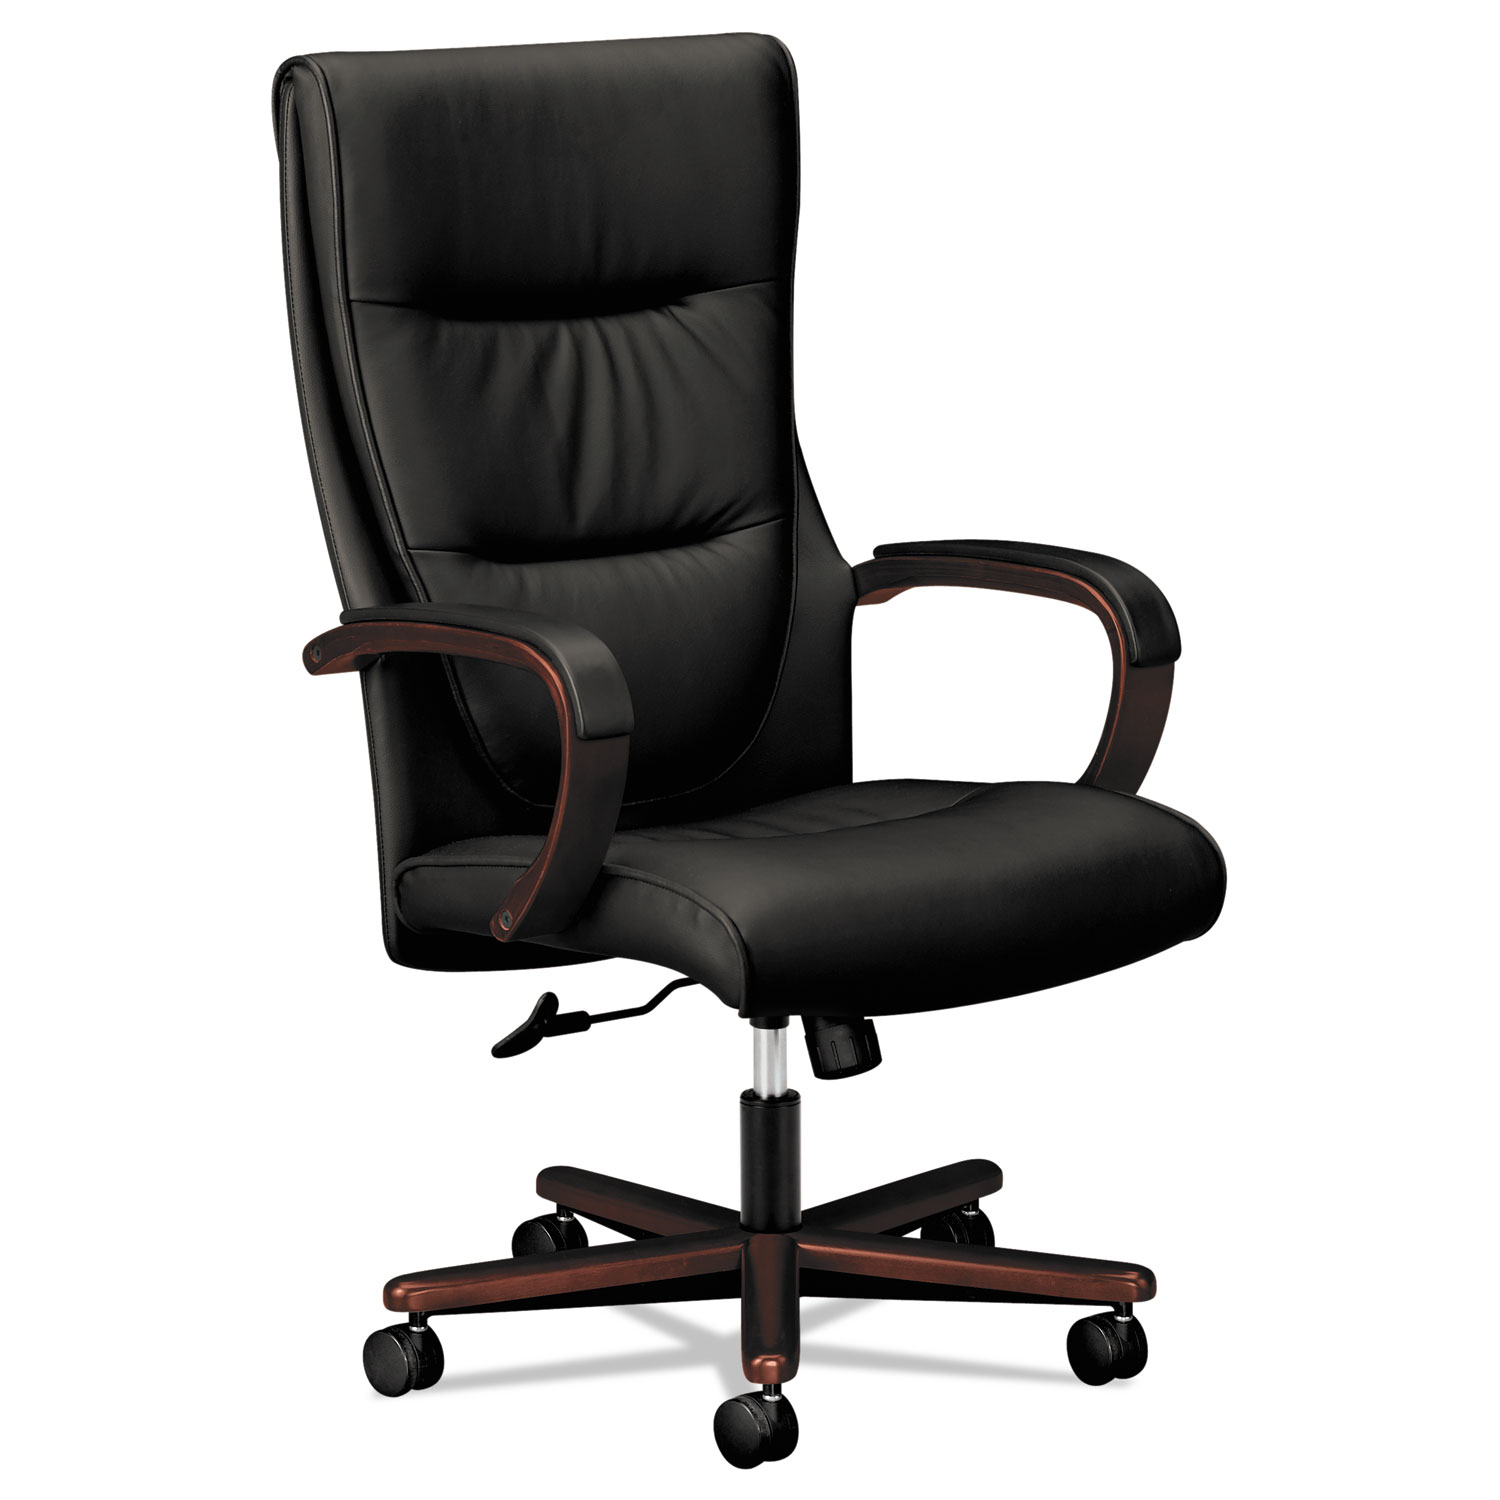 VL844 Series High-Back Swivel/Tilt Chair, Black Leather/Mahogany